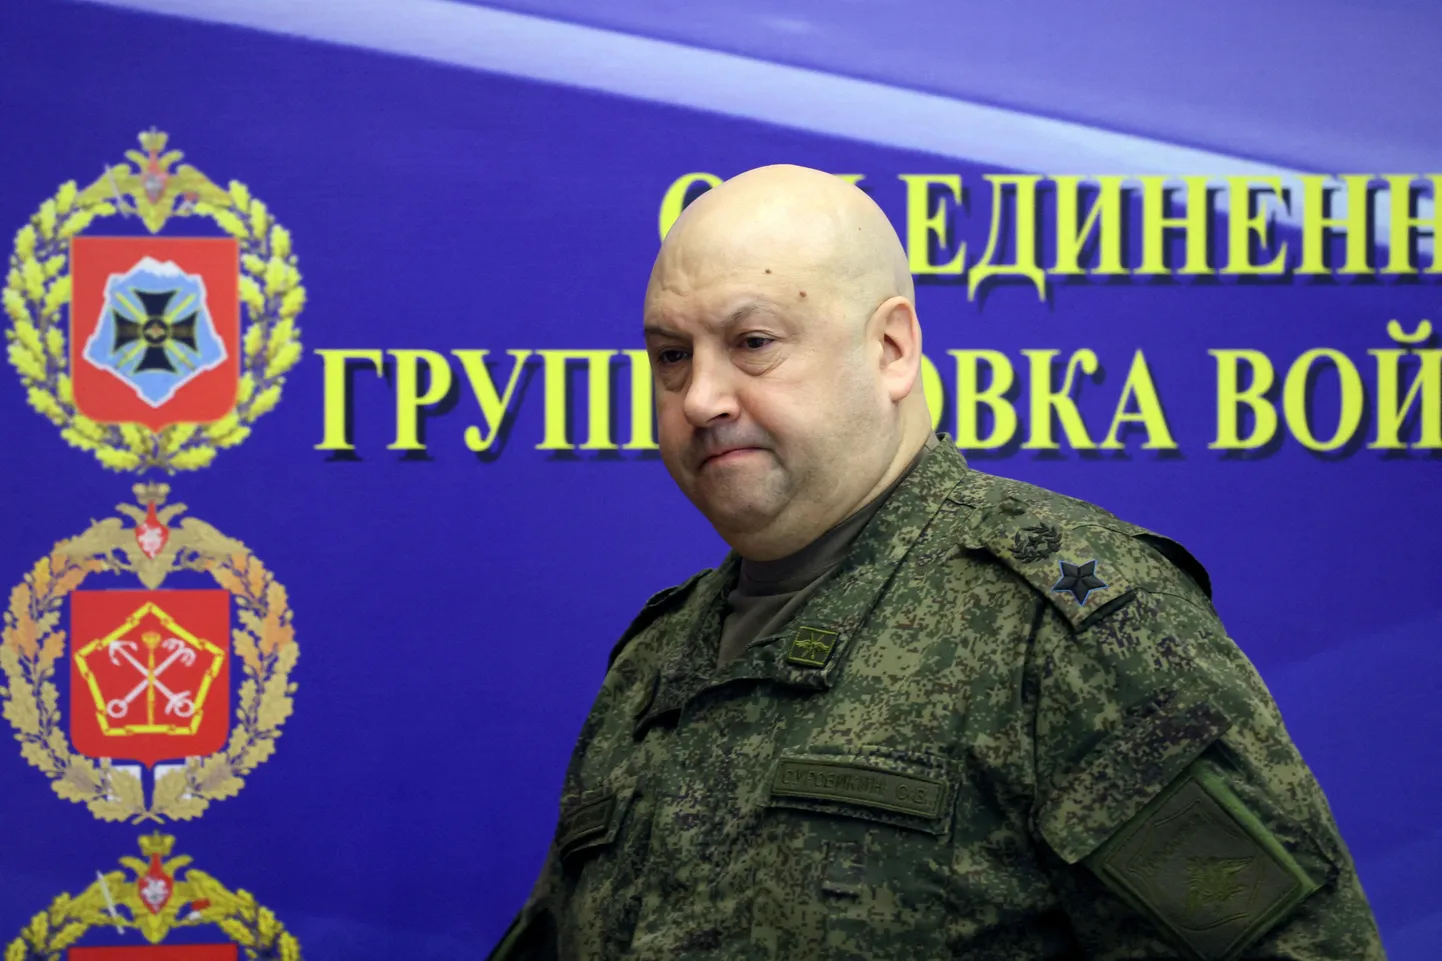 Vene kindral Sergei Surovikin